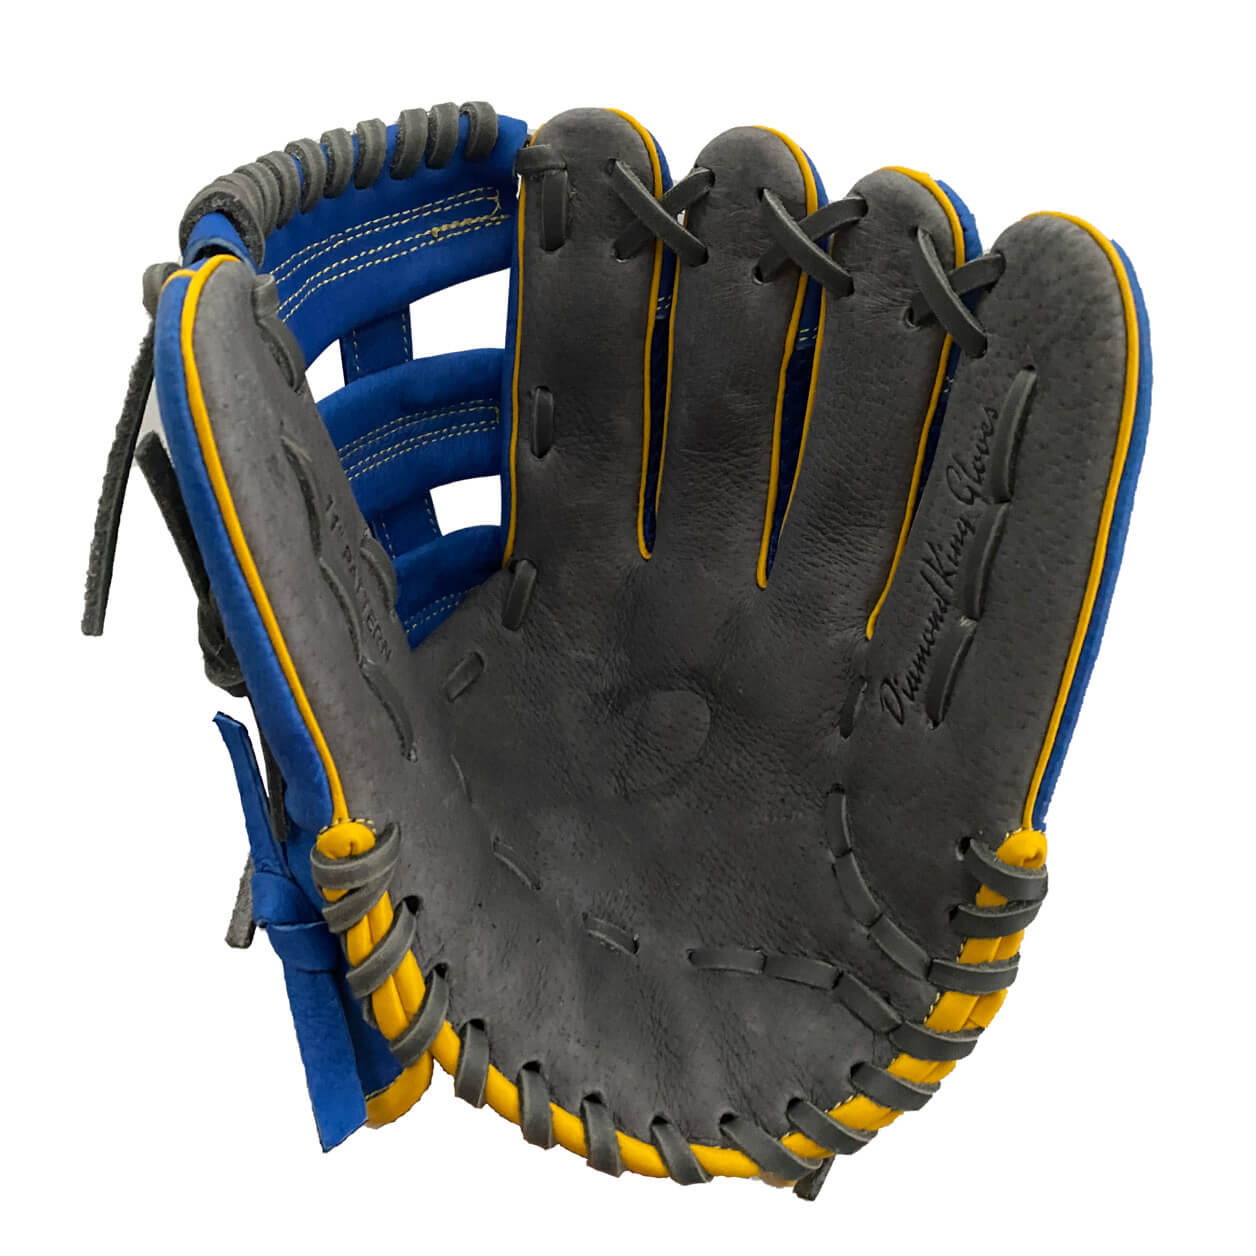 Play-ball 11” Blue & Gray Baseball Glove - Hot Hitters | Baseball & Softball Shop - baseball softball shop online europe shipping 